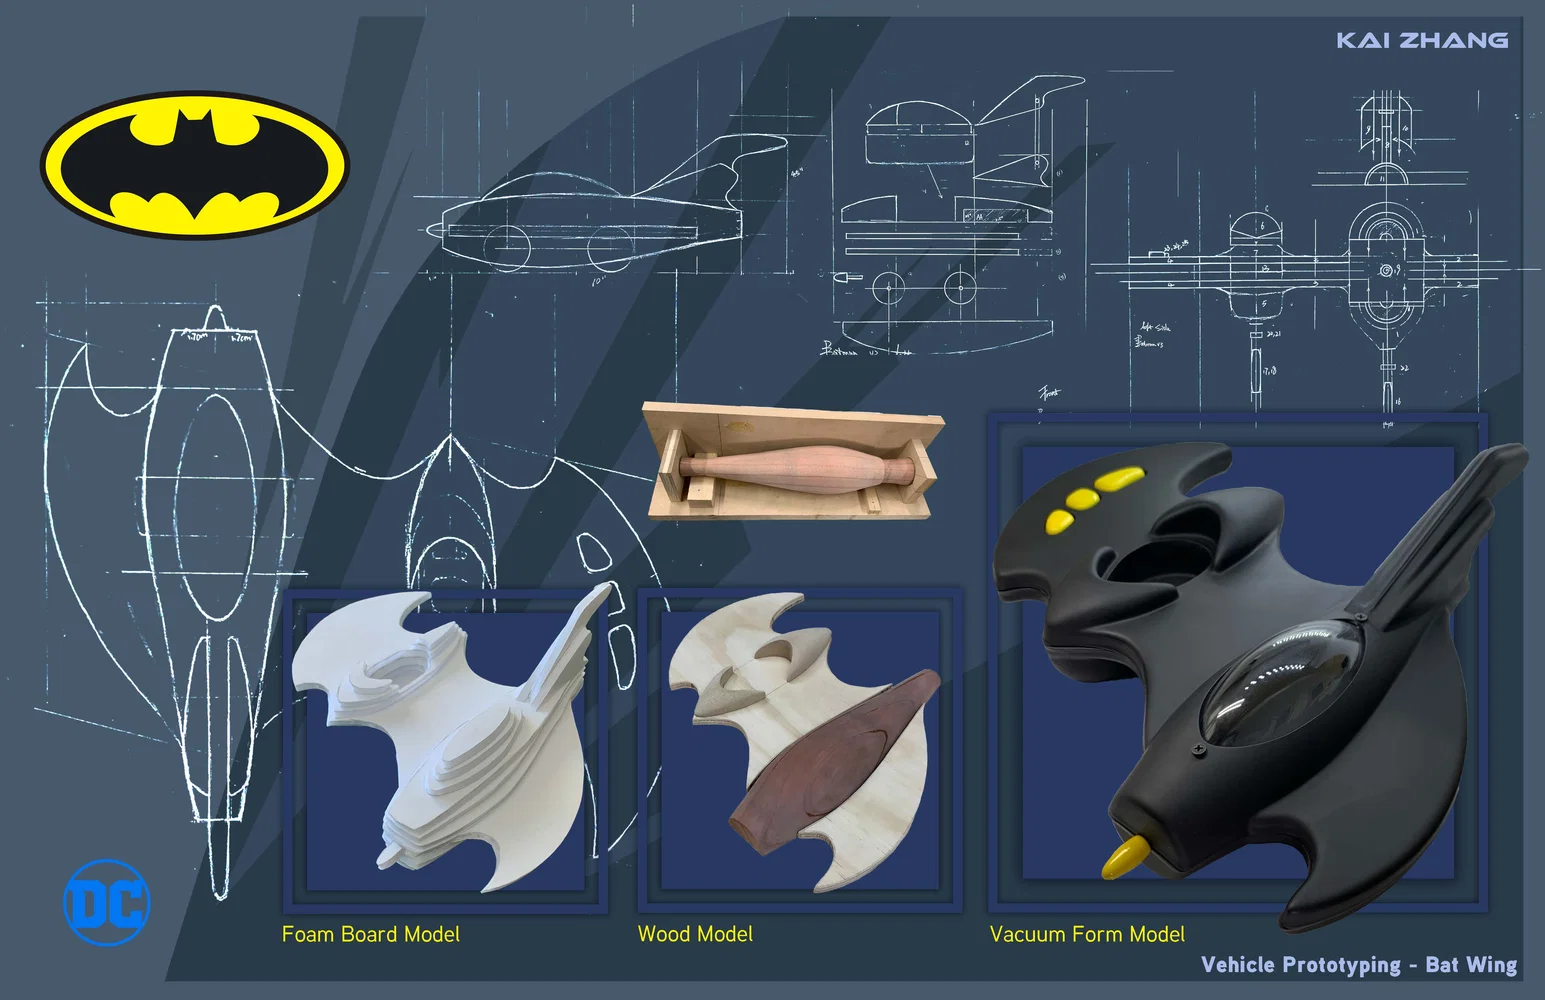 Vehicle Prototyping - Bat Wing